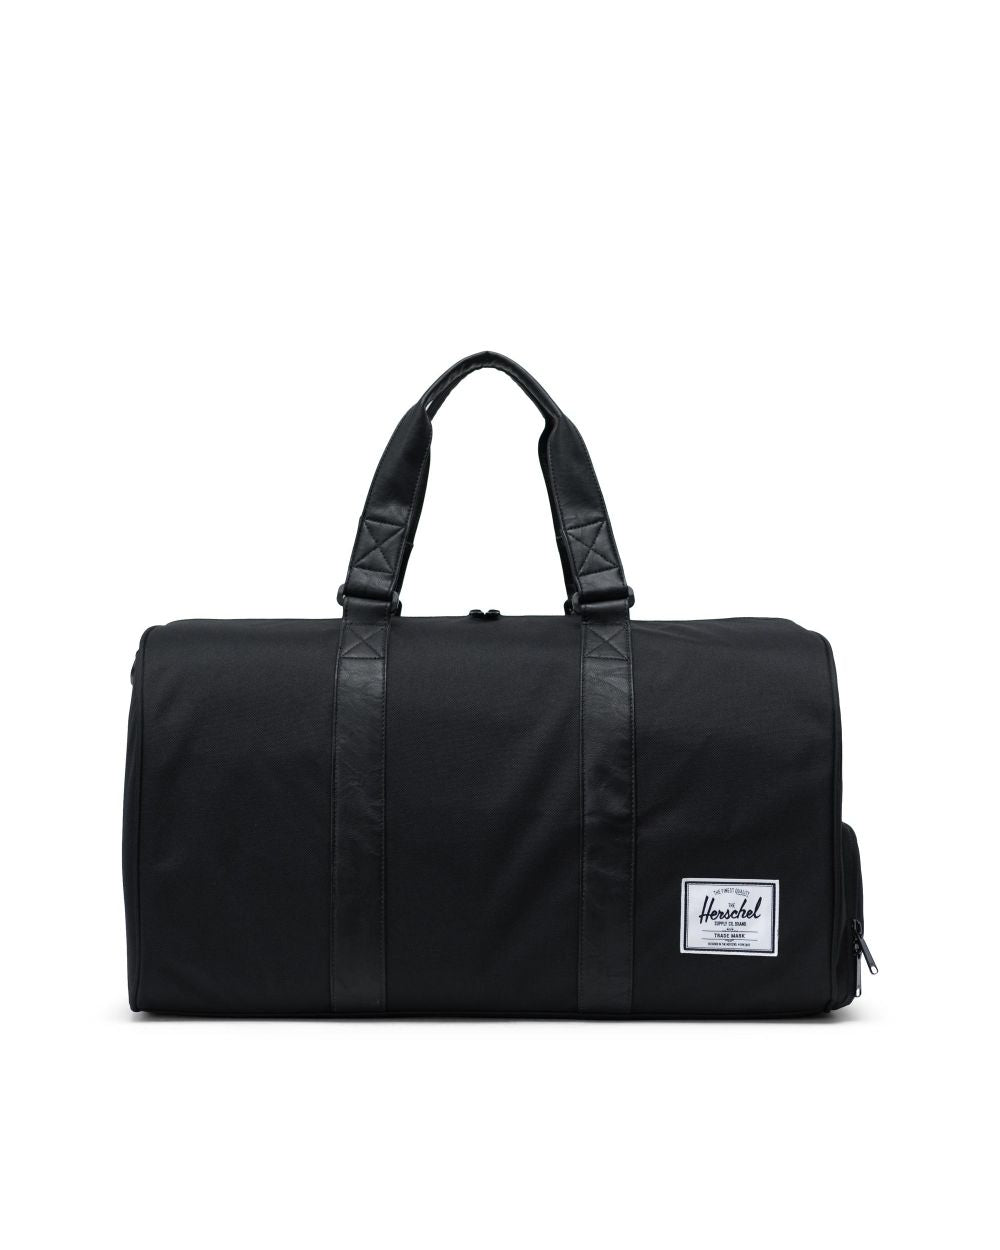 HERSCHEL Novel Duffle Bag Black/Black Duffle Bags Herschel Supply Company 